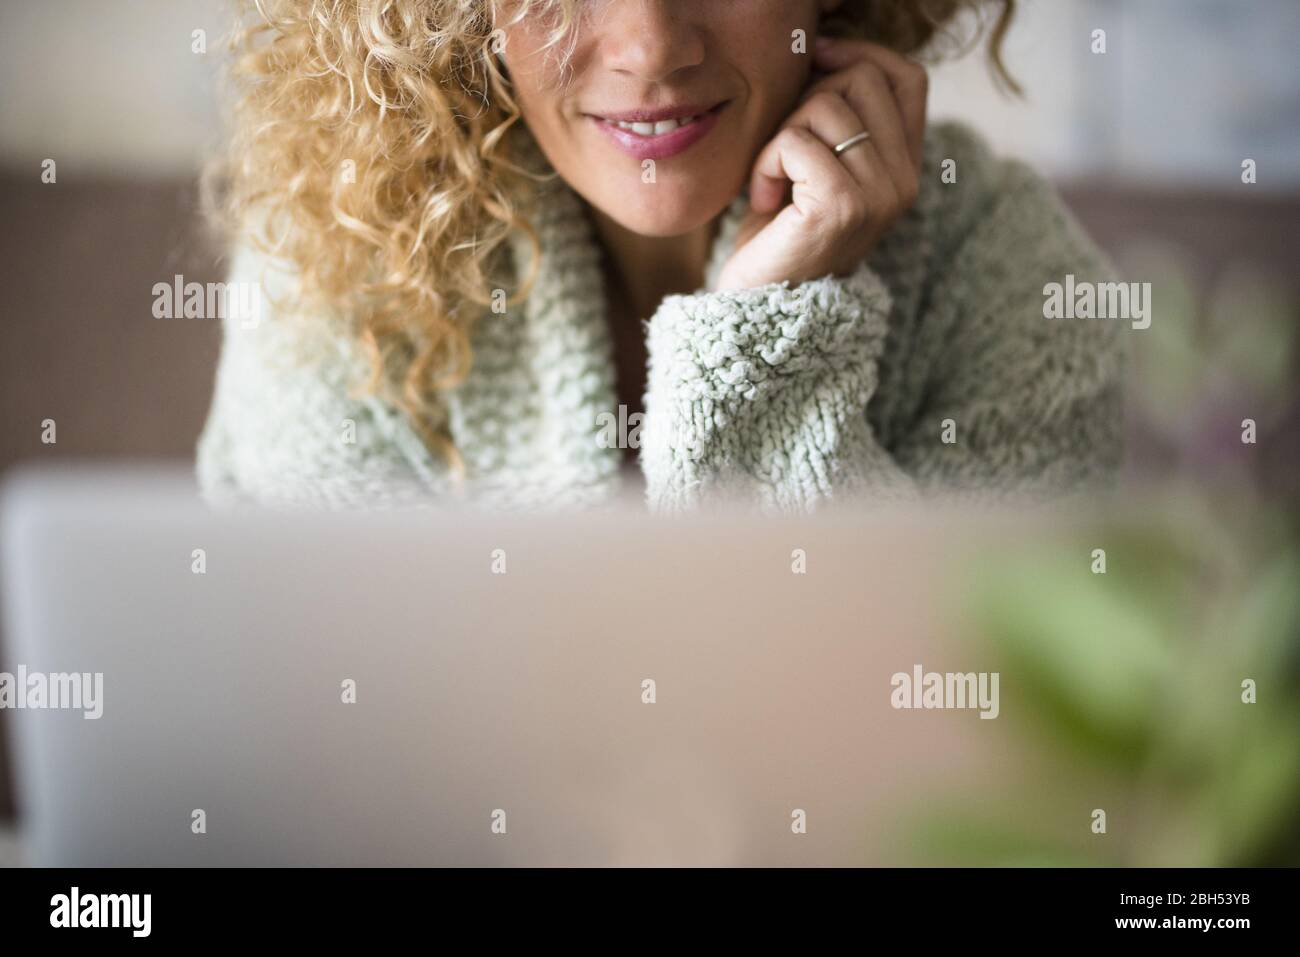 Woman smiling behind laptop Stock Photo